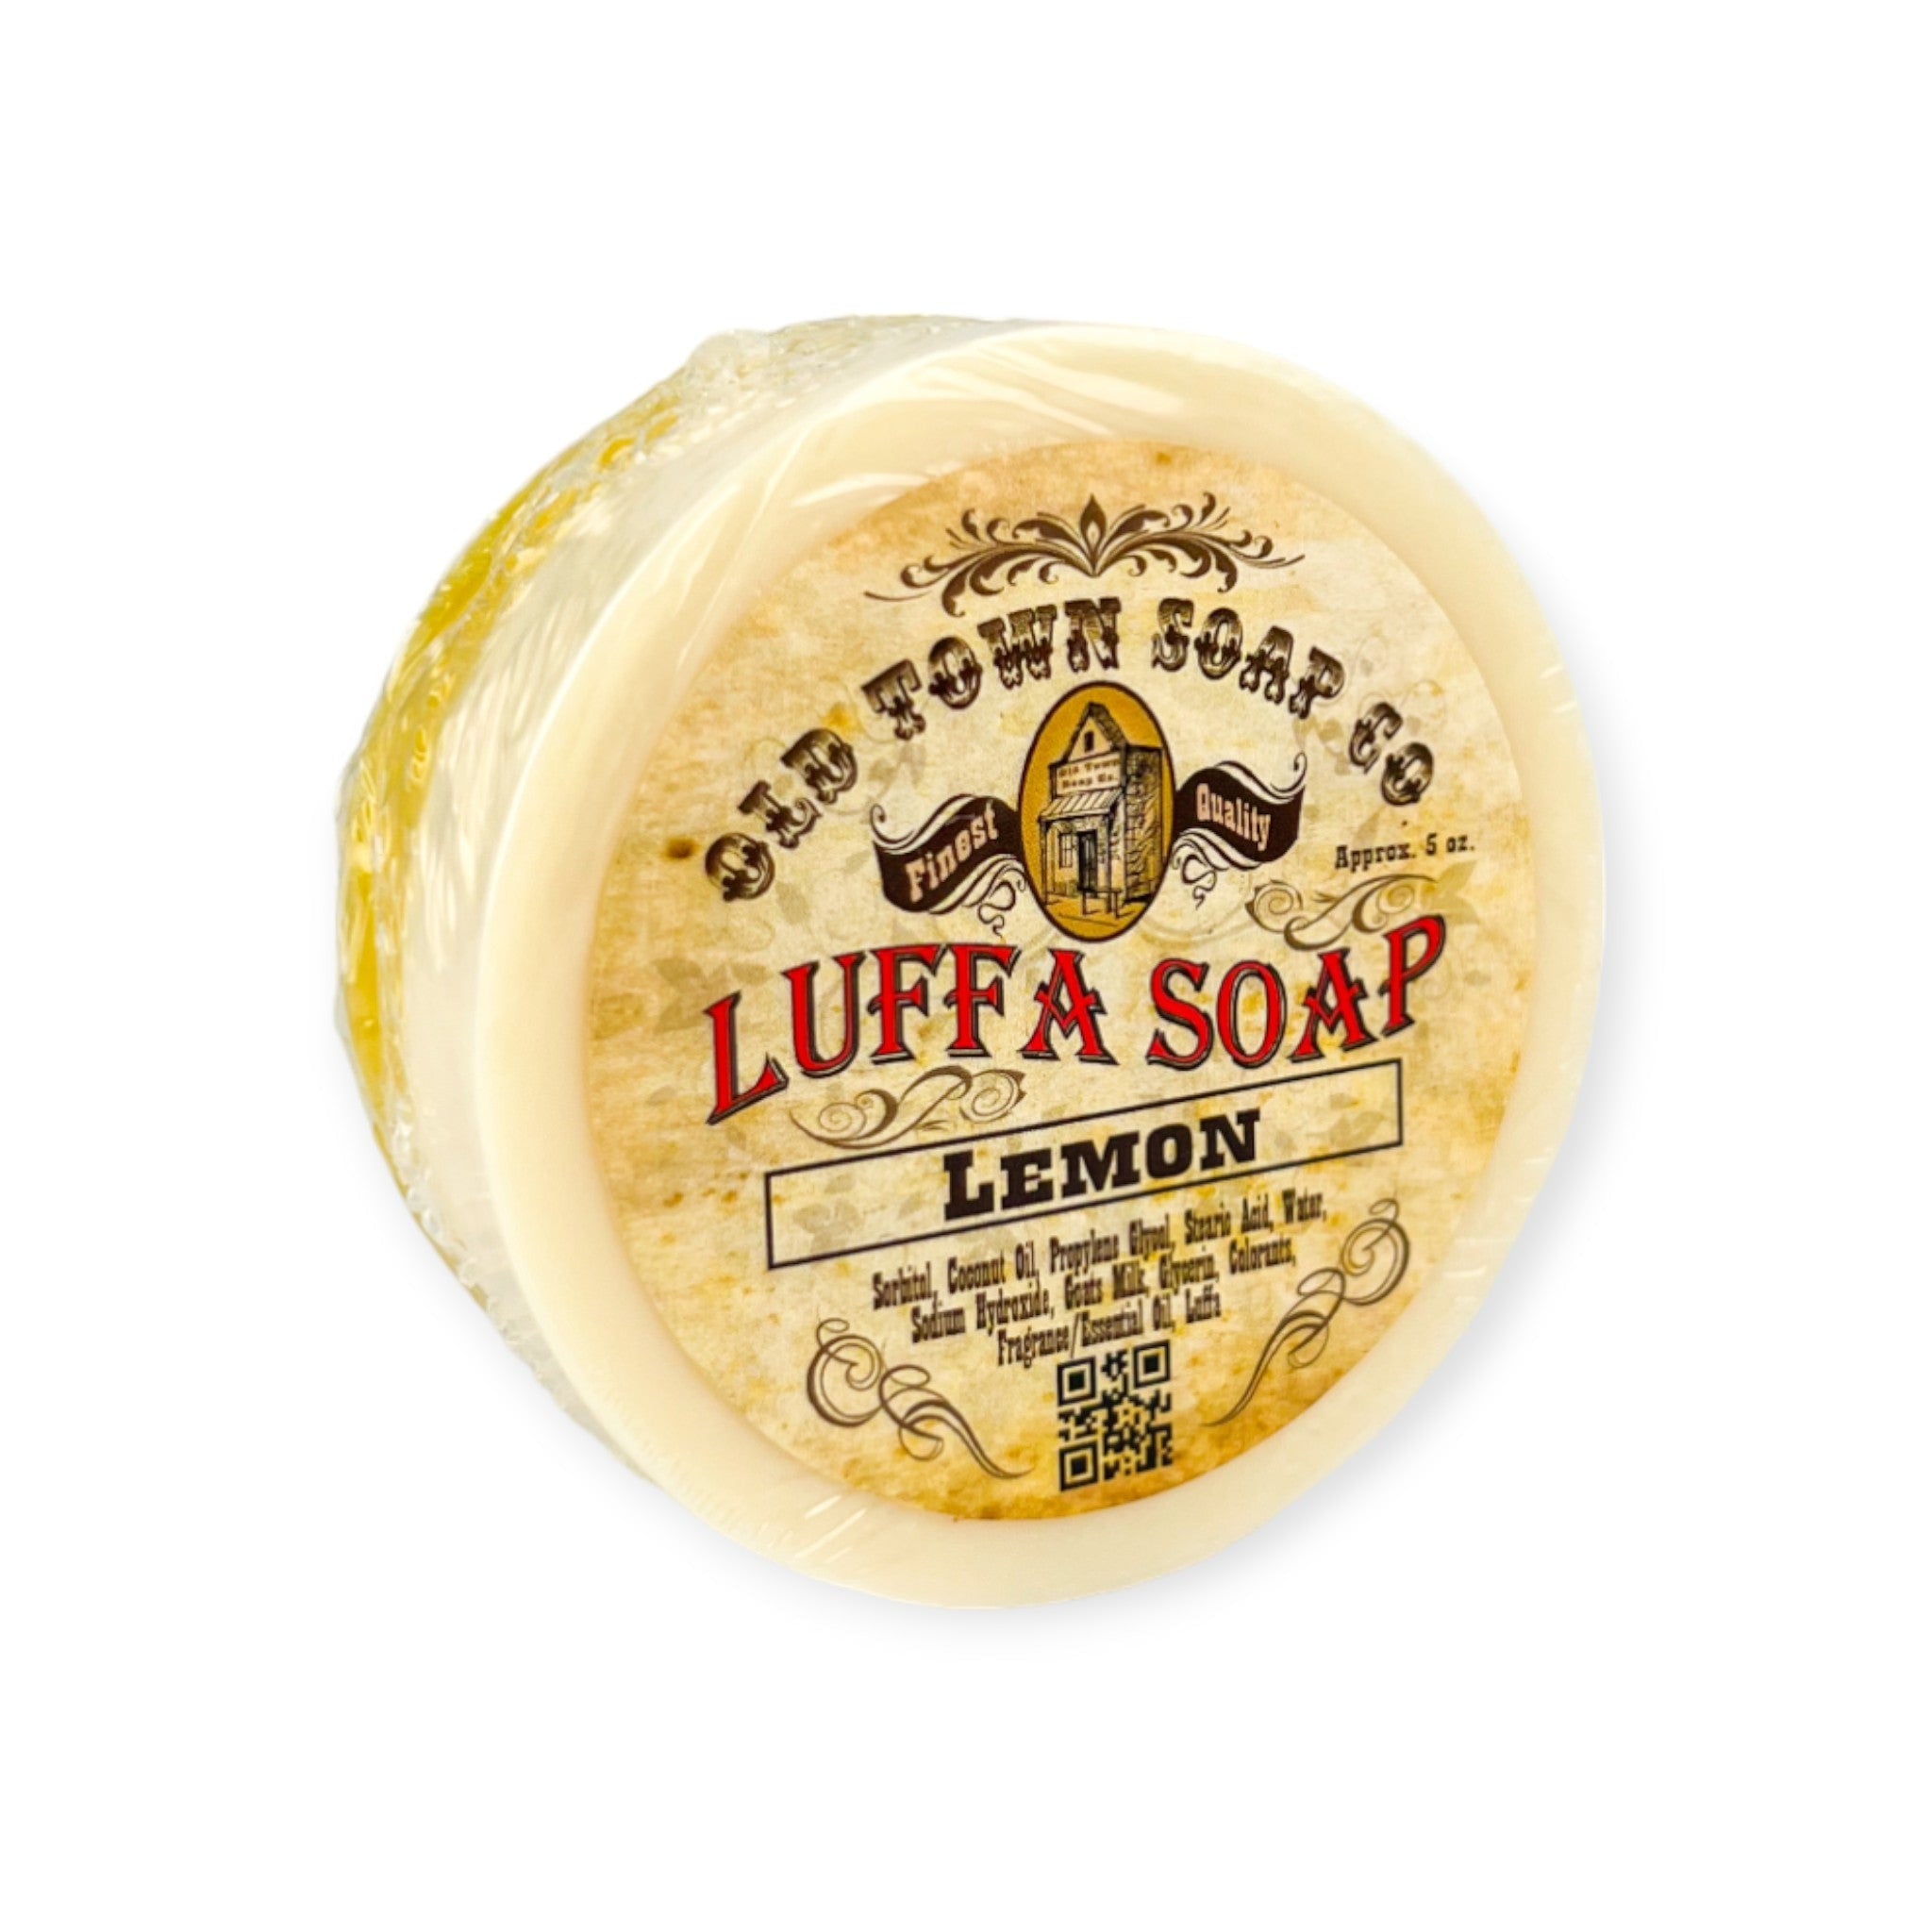 Lemon - Luffa Soap - Old Town Soap Co.